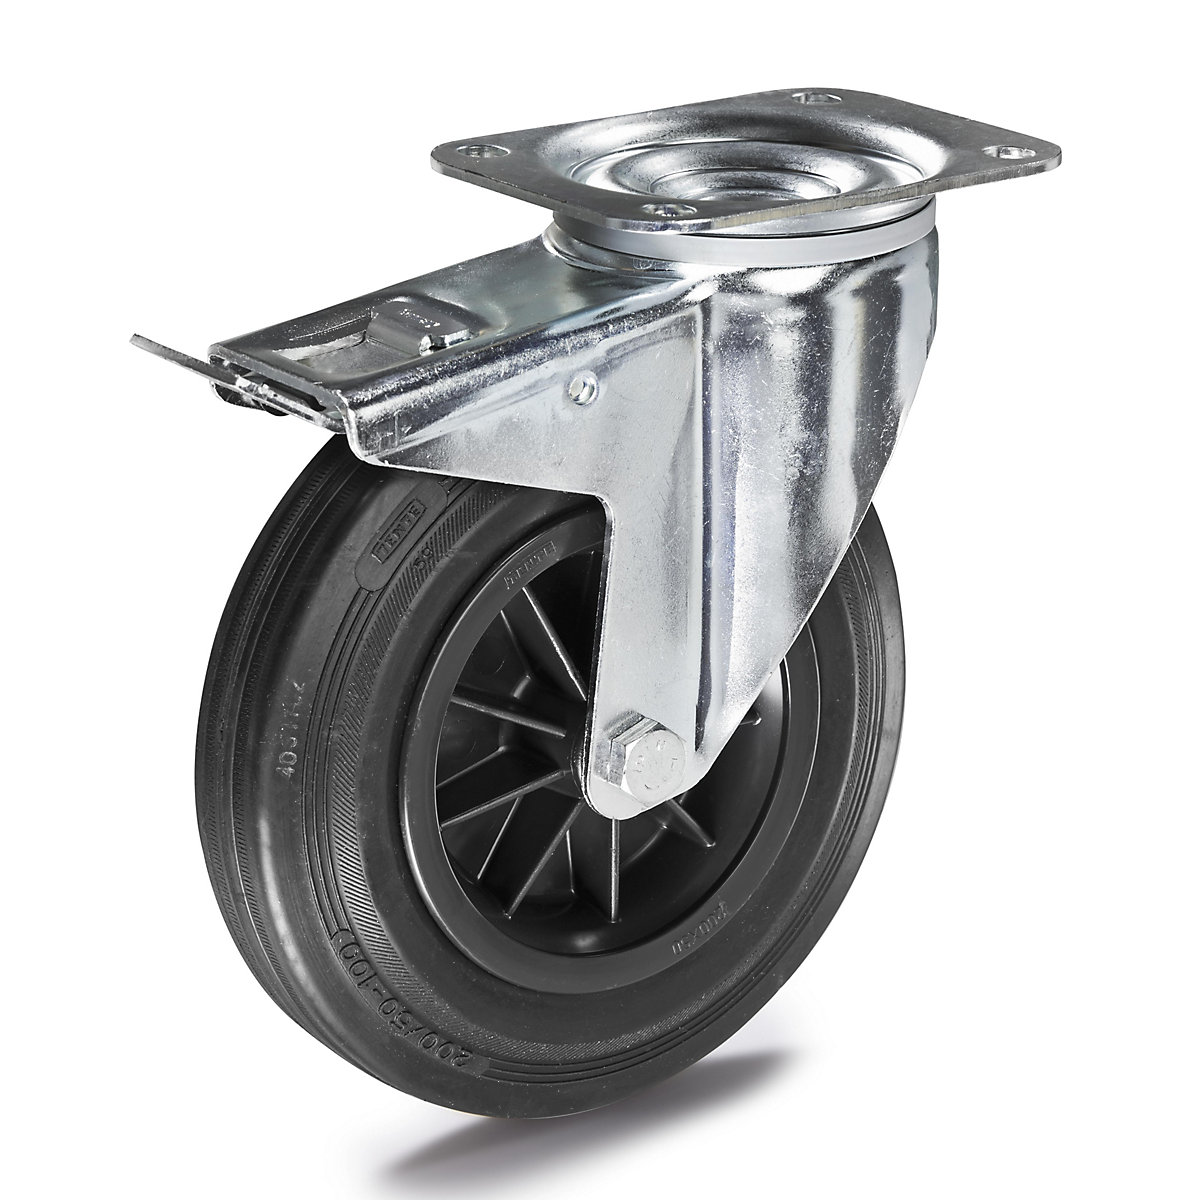 Solid rubber tyre on plastic rims – TENTE, wheel Ø x width 160 x 40 mm, swivel castor with double stop-3